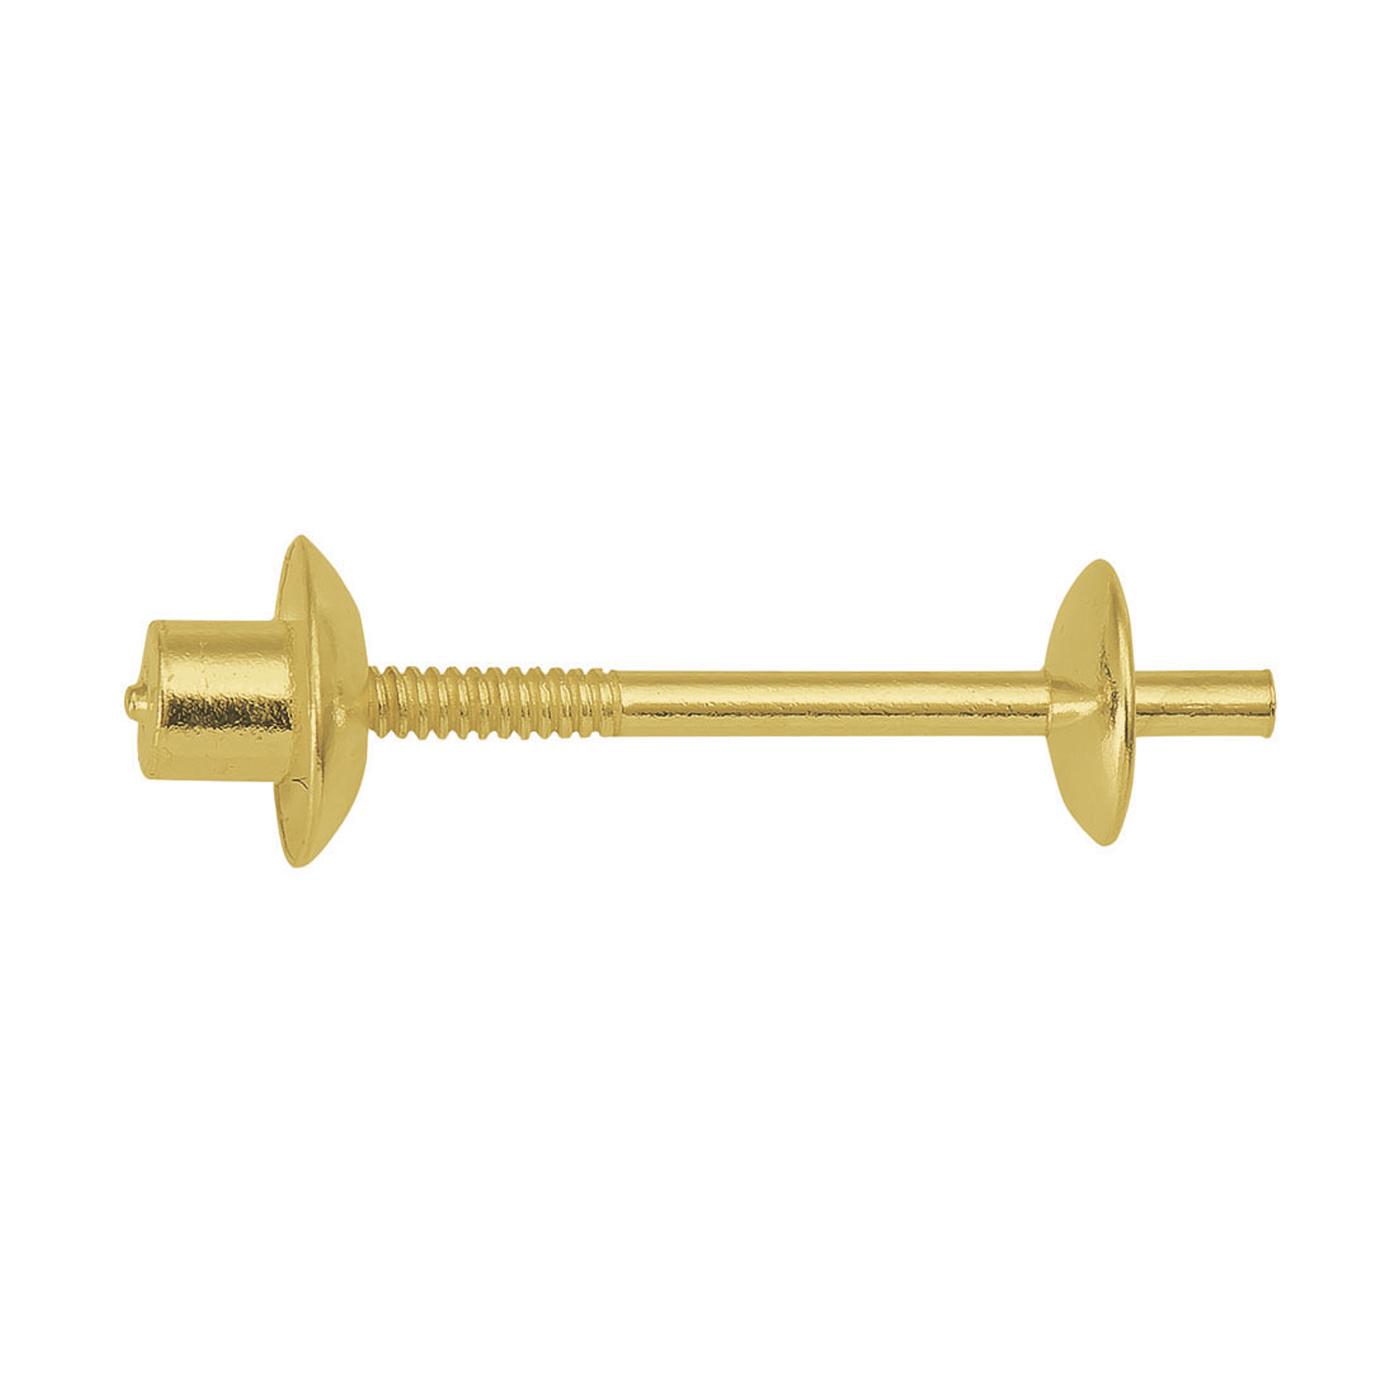 Double Ball Pin, 585G, Pin Length 3-10 mm - 1 piece